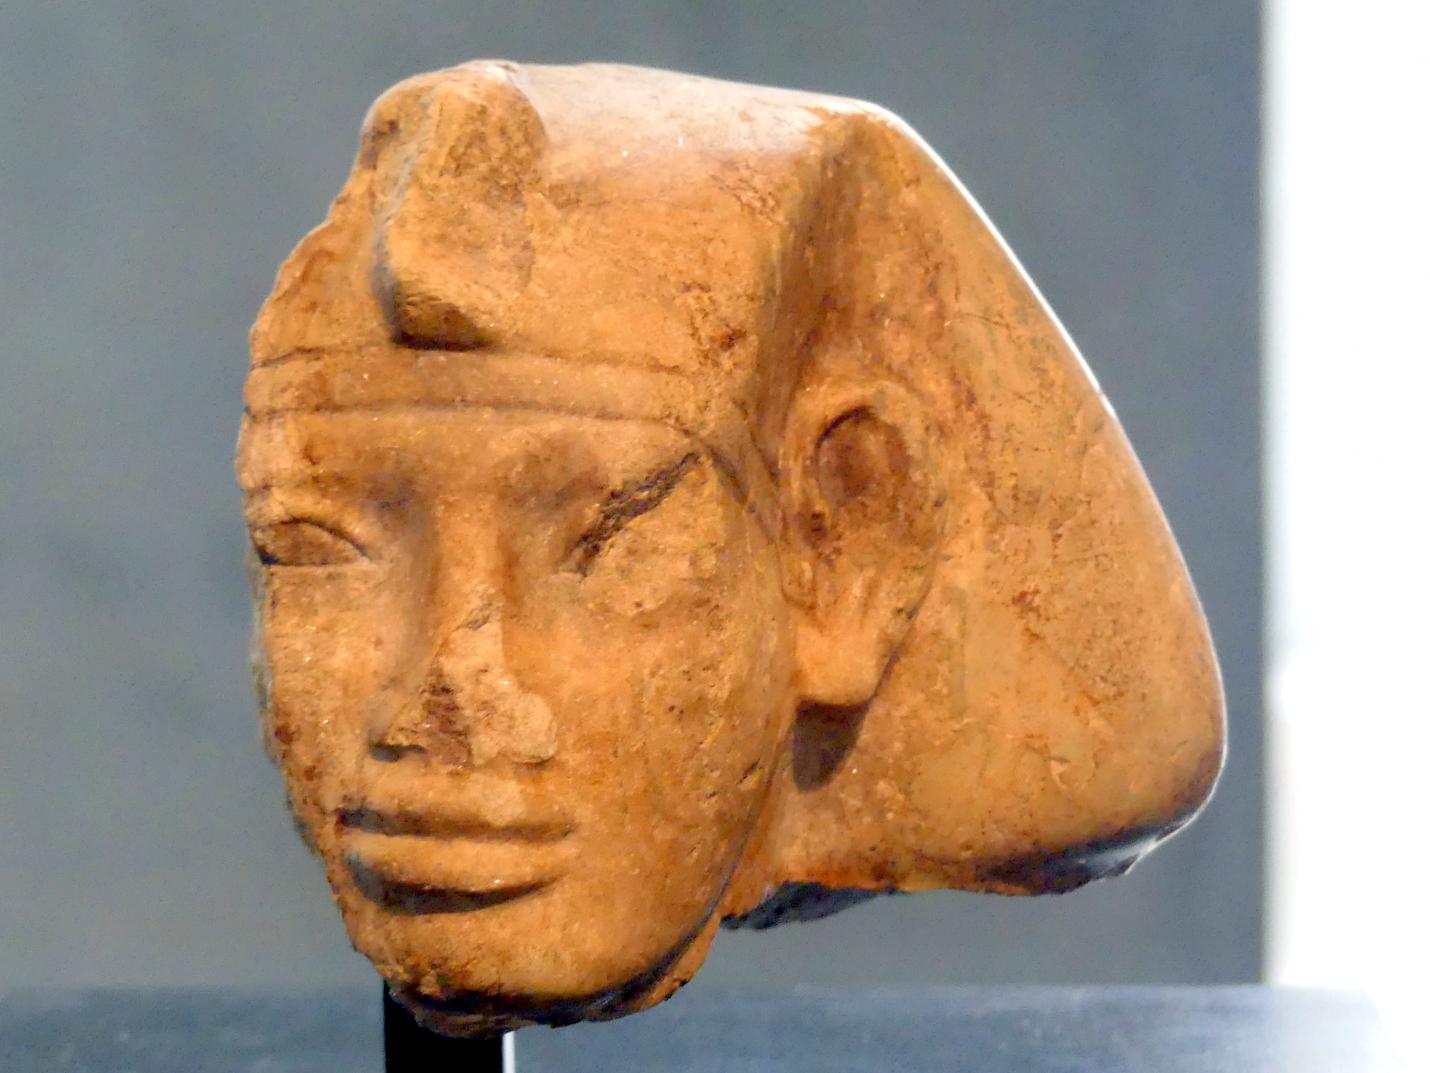 Statuenkopf des Pharao Amenemhet V. (?) mit Chatkopftuch, 13. Dynastie, Undatiert, 1750 v. Chr., Bild 1/5